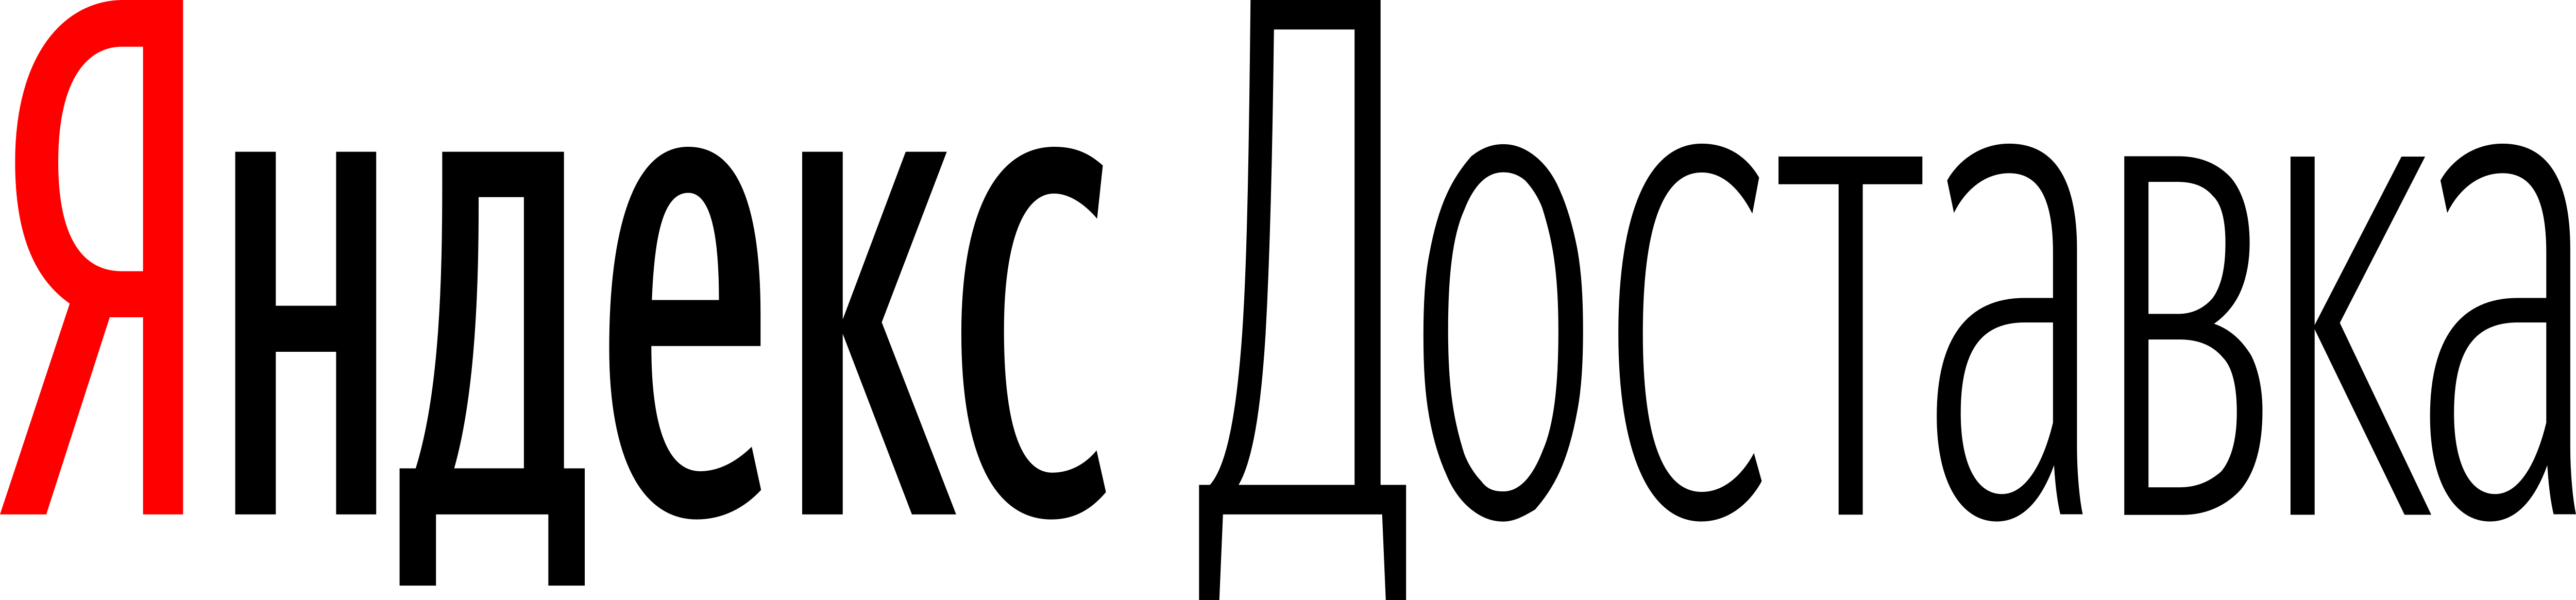 Yandex Logo Background PNG